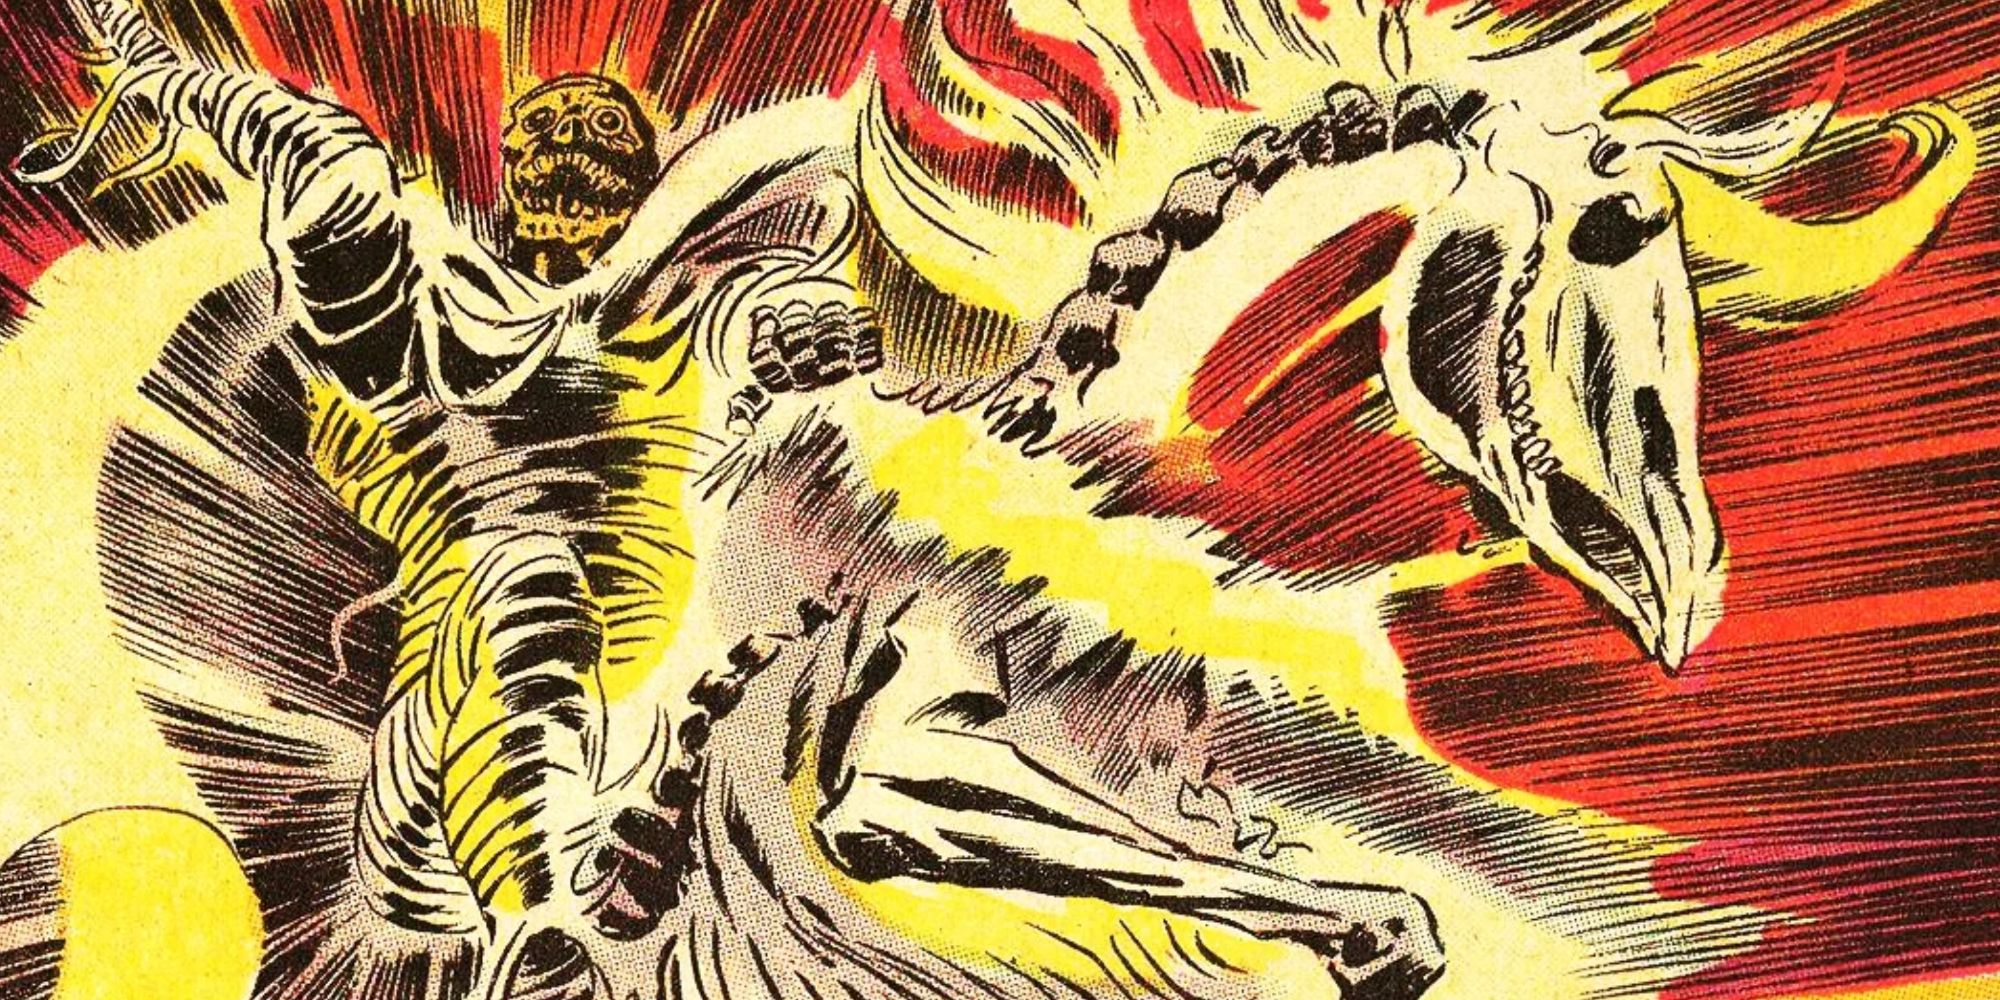 Death's Head rides his skeletal horse in Marvel Comics.